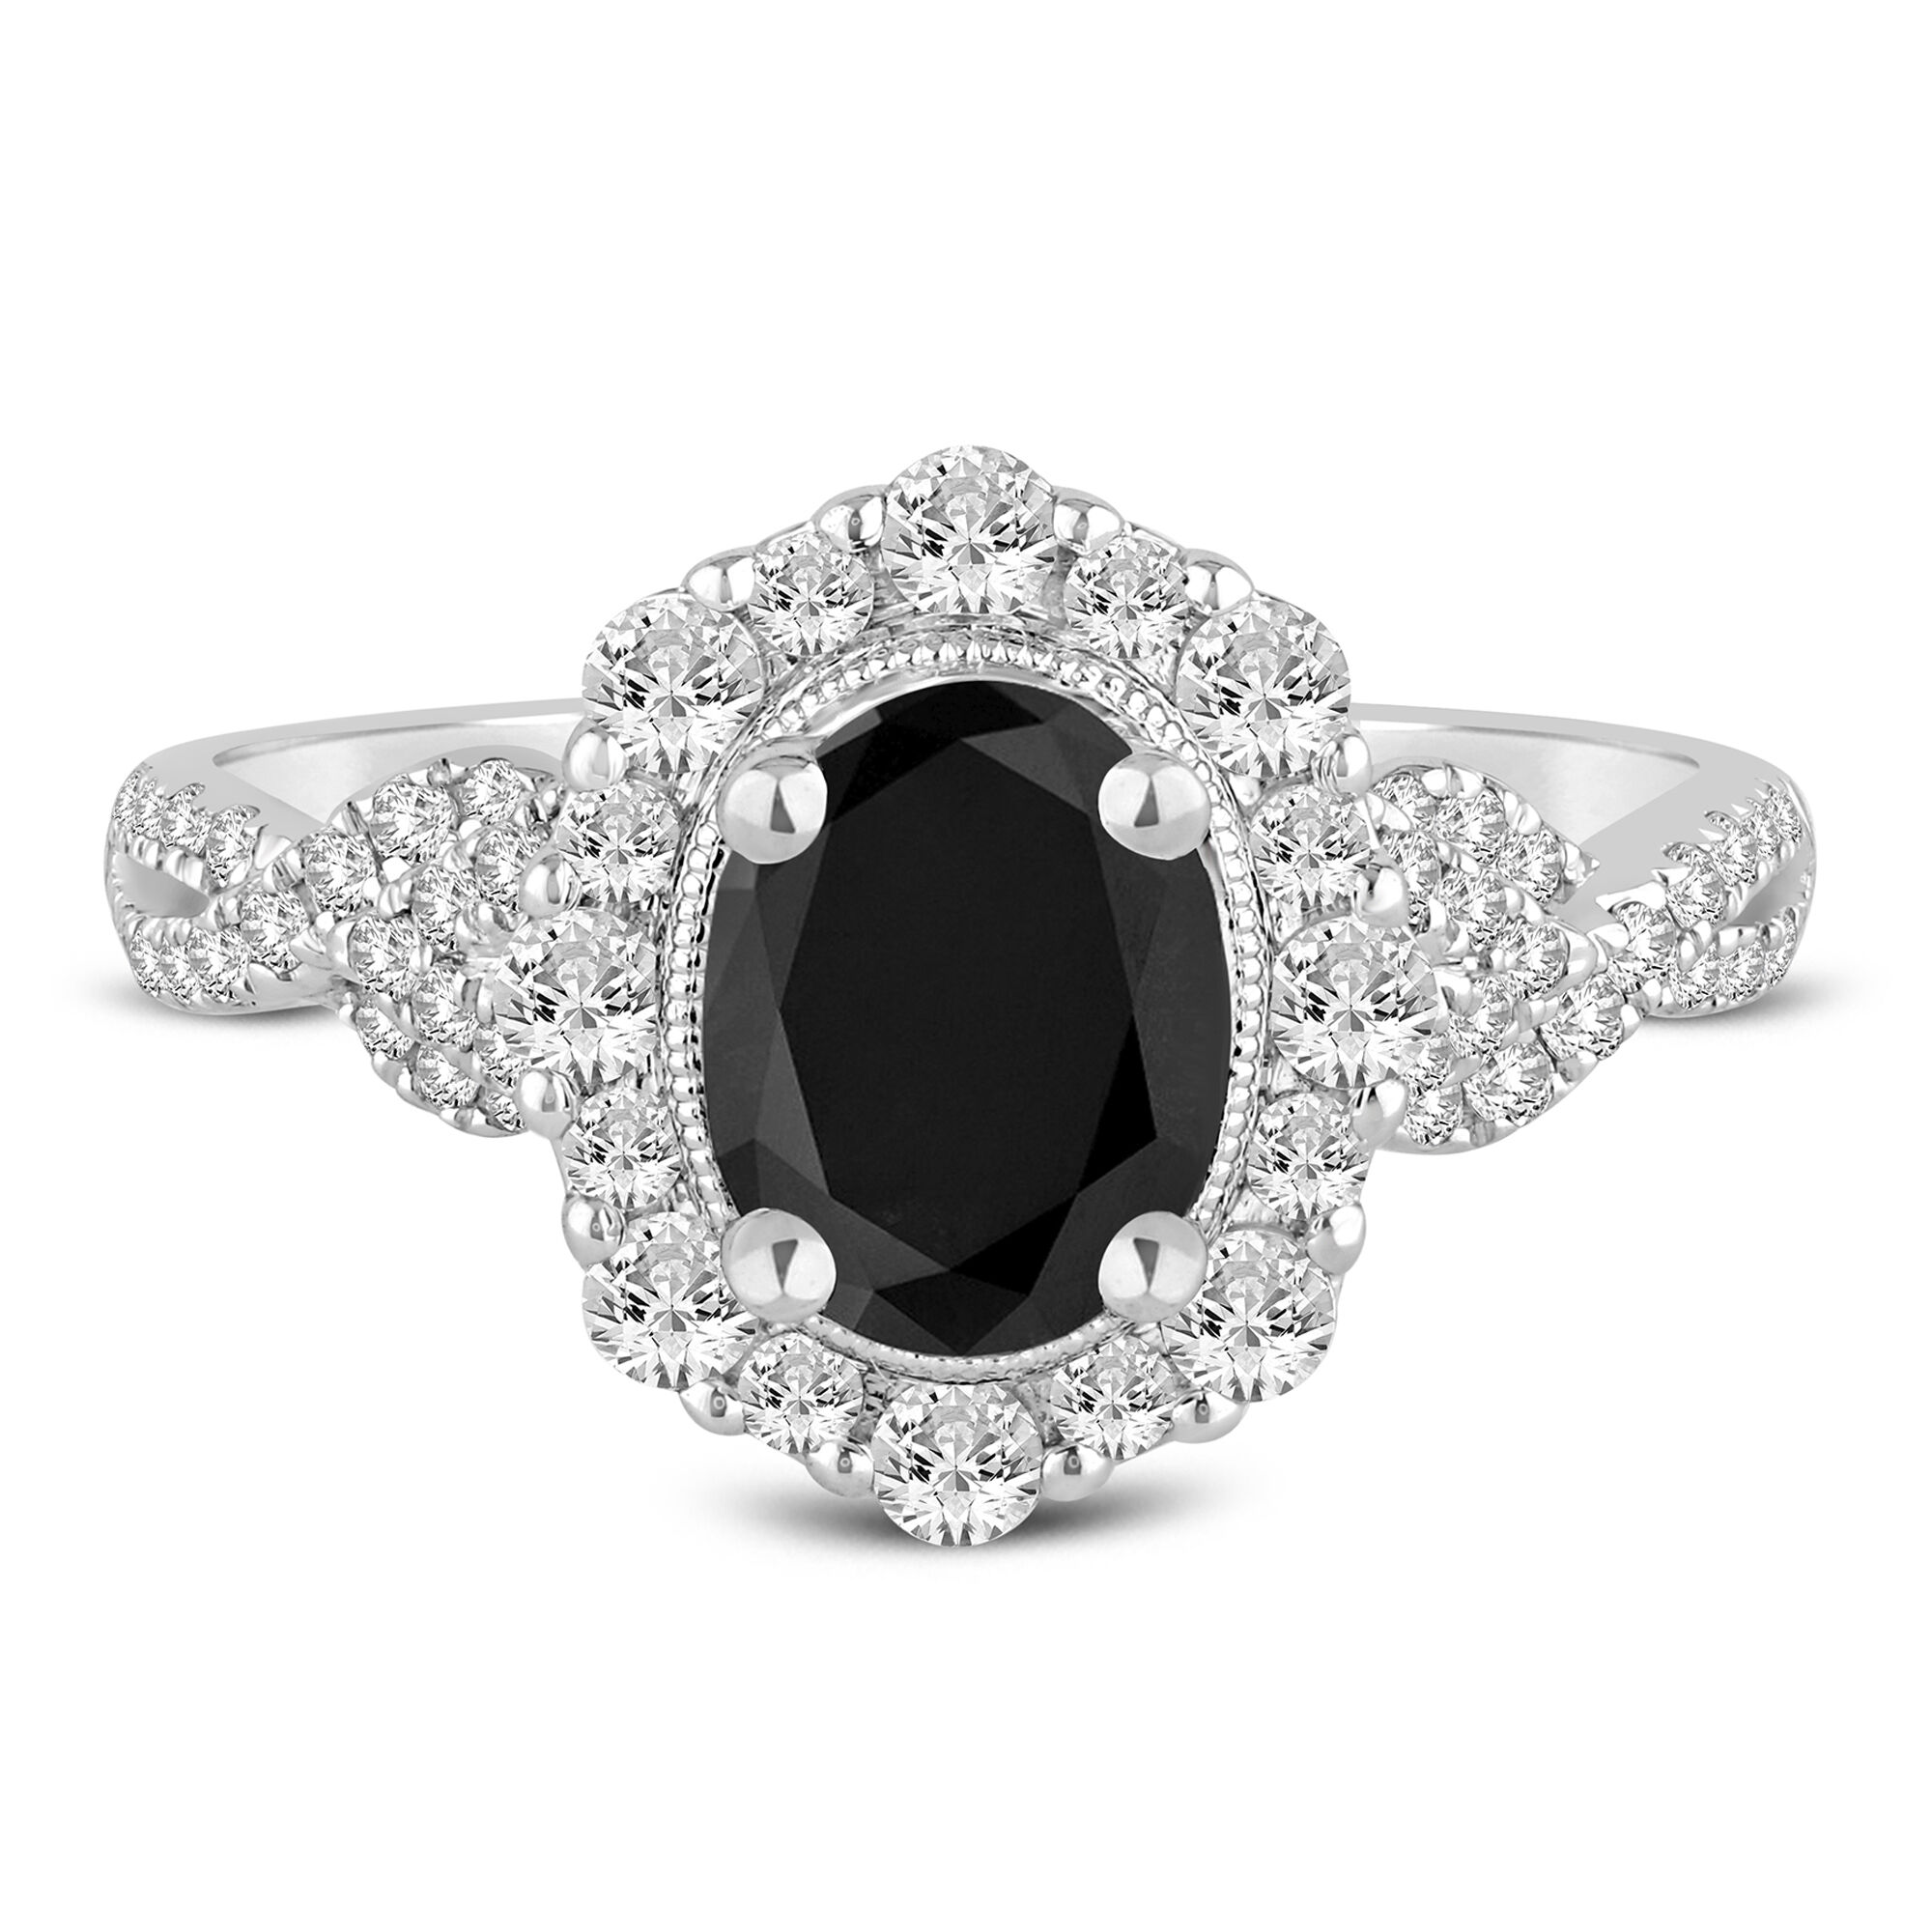 Zac Posen Engagement Rings: New Diamond Engagement Rings, Blue Nile |  Glamour